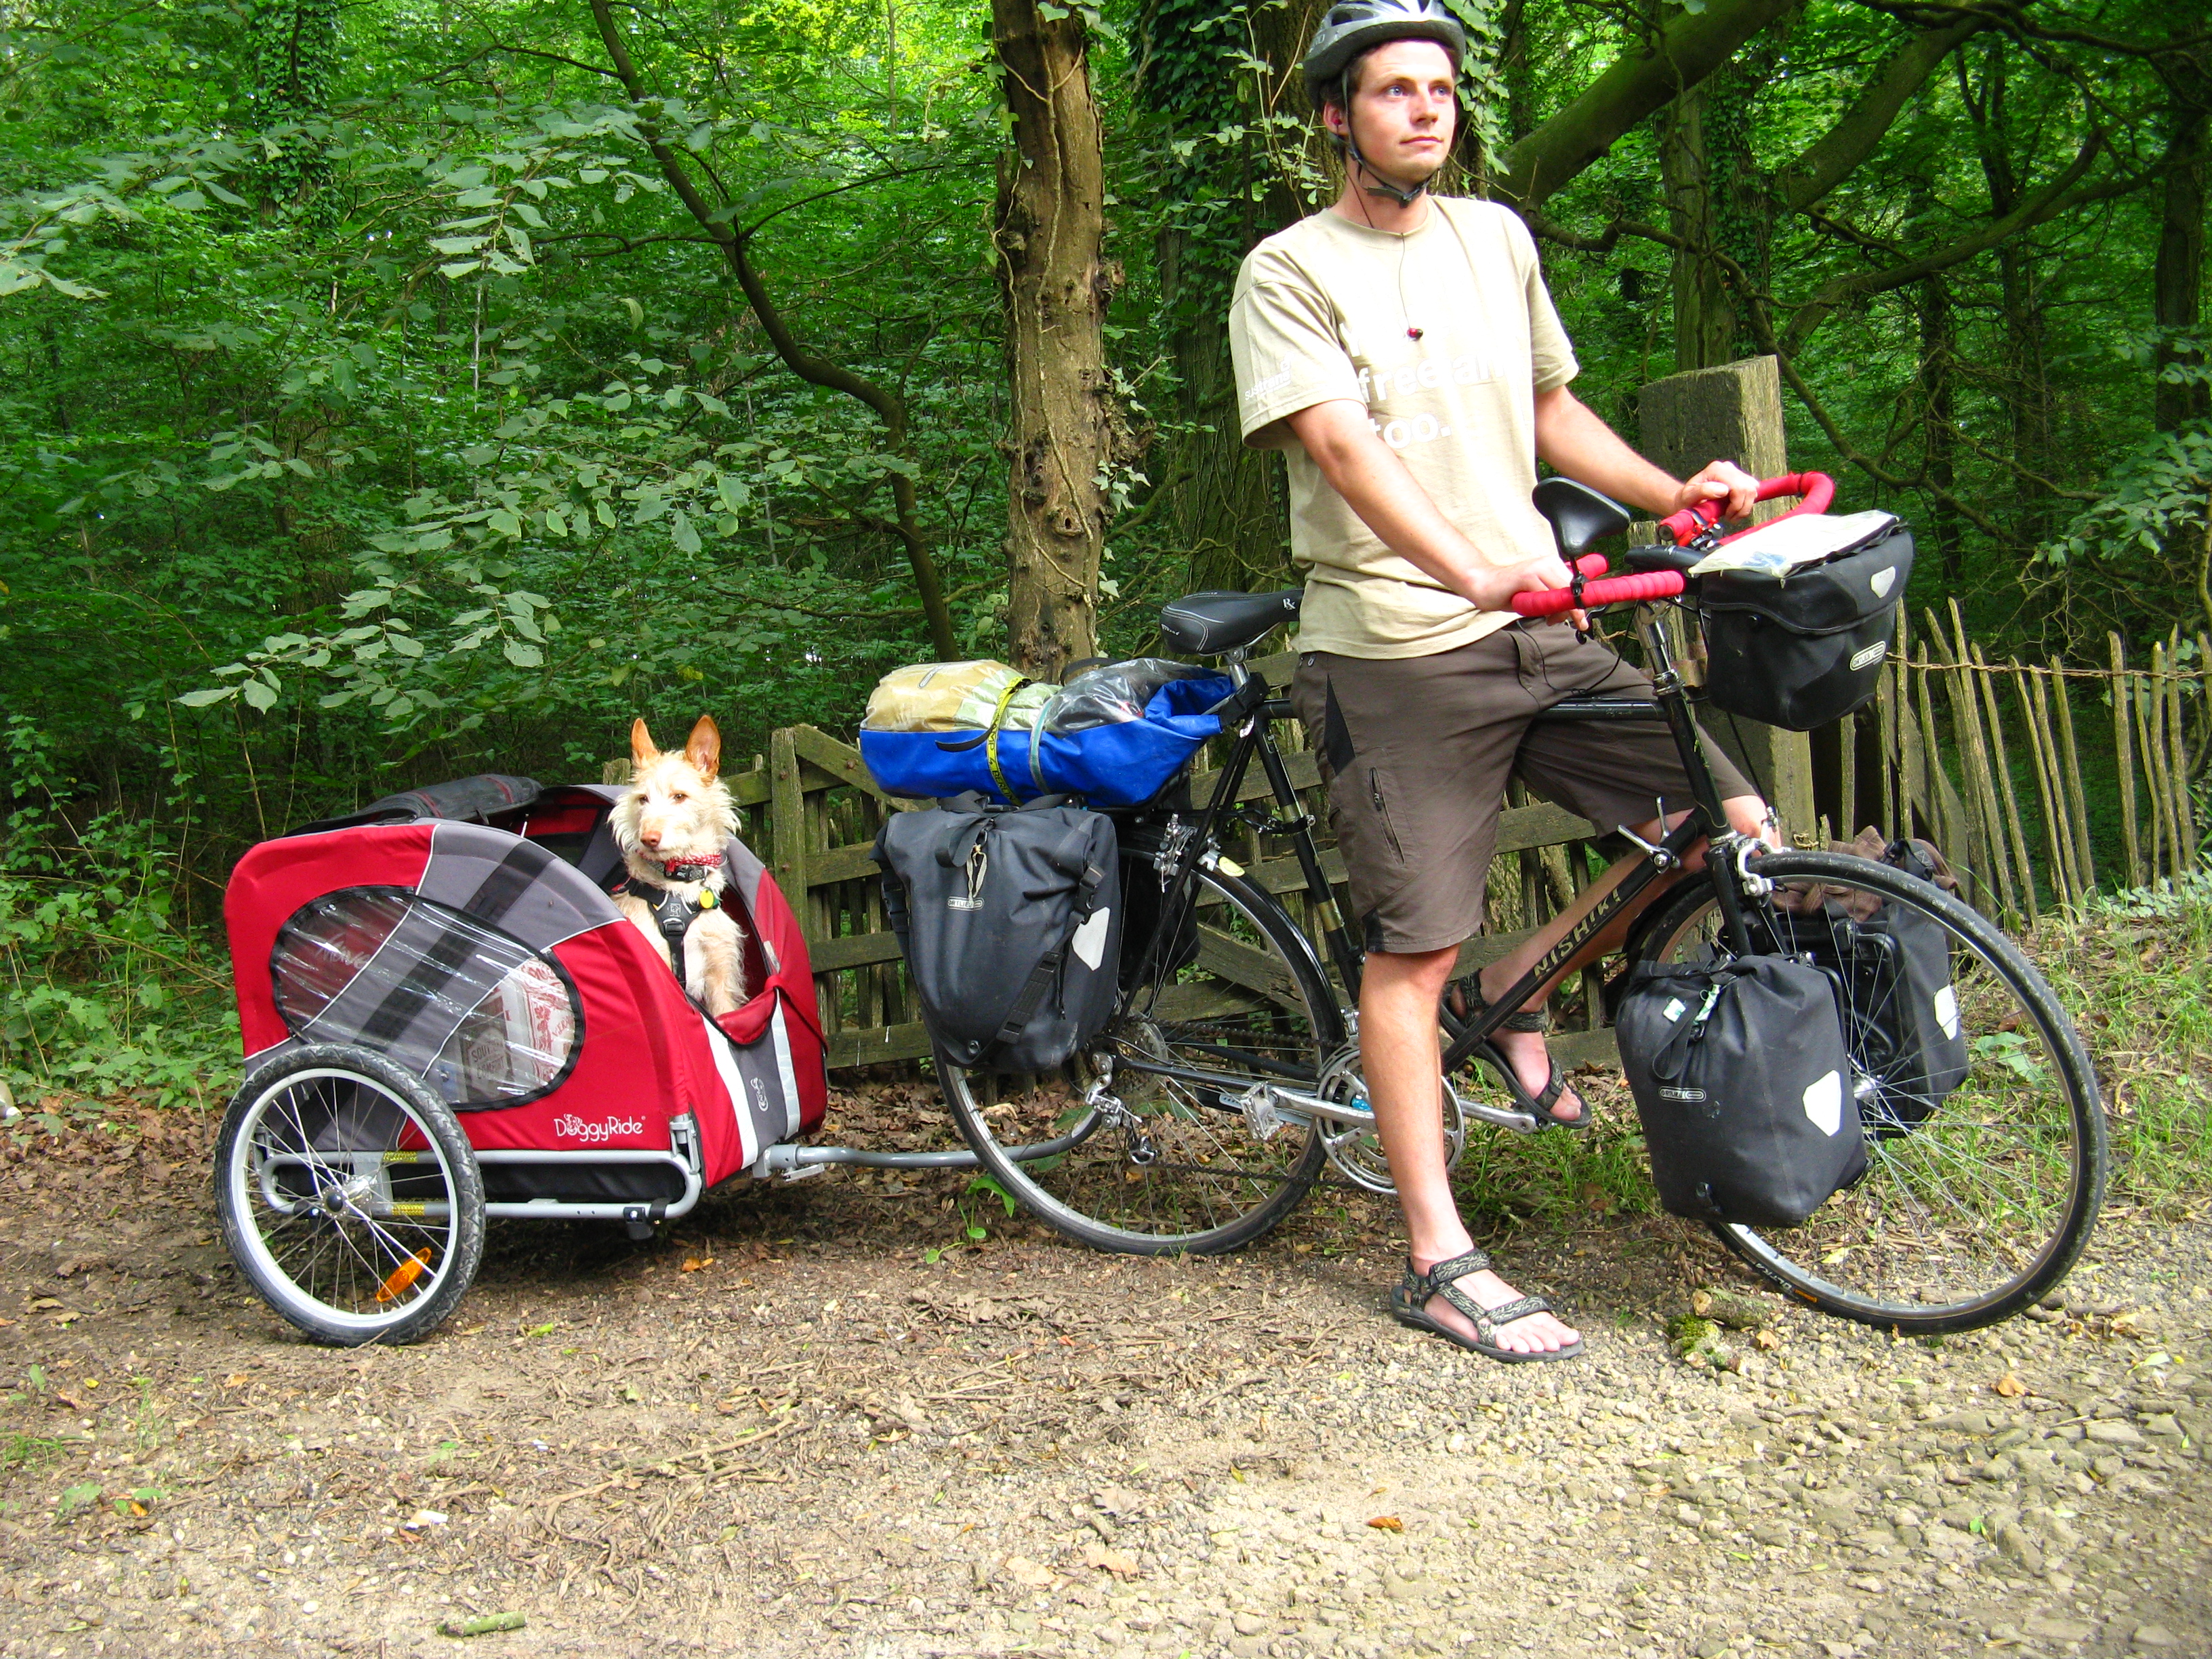 bike carriage for dog